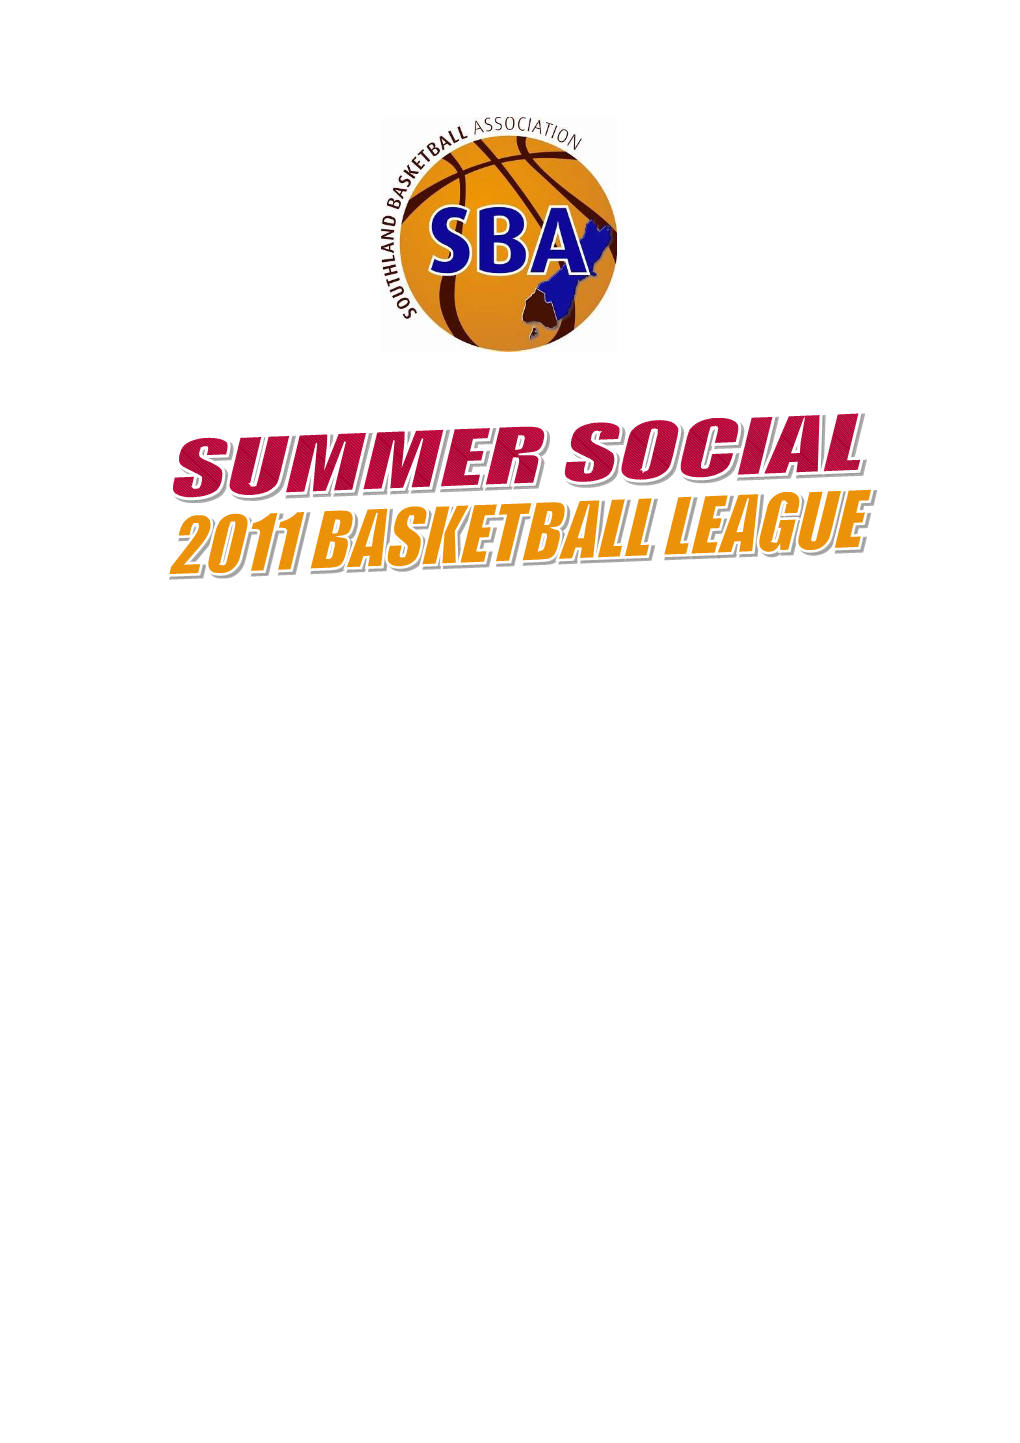 Southland Basketball Association